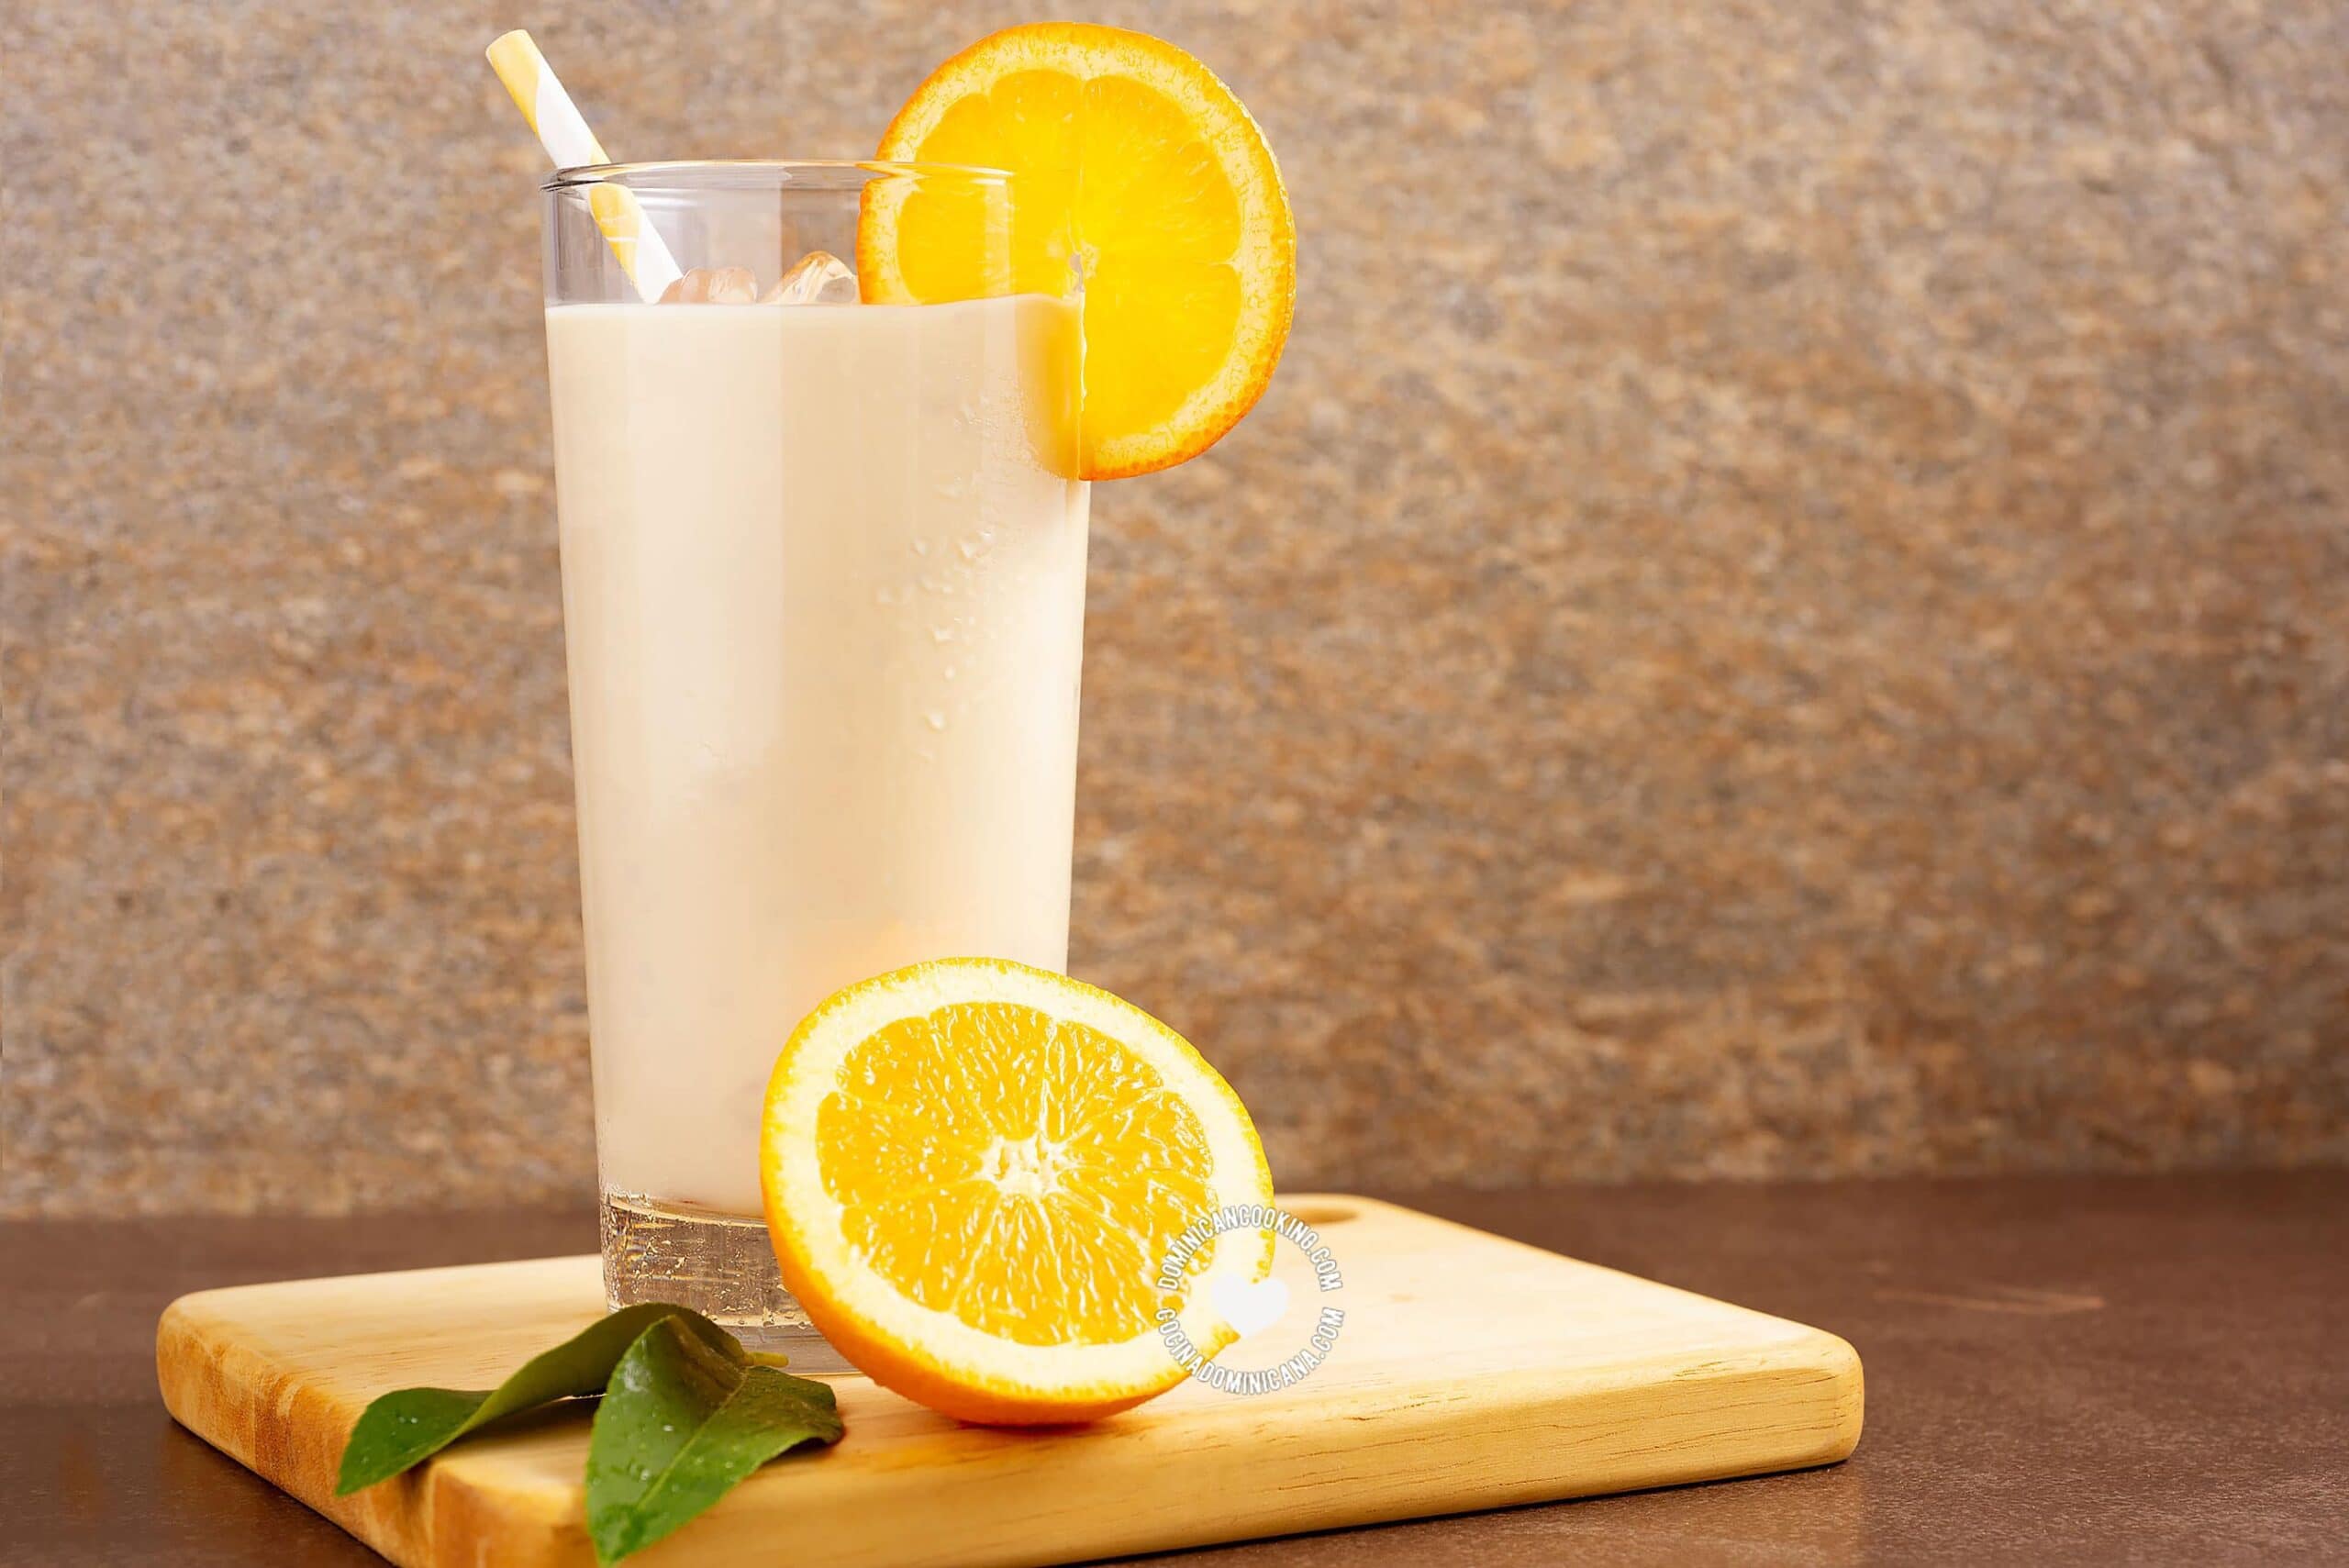 Morir soñando (glass of milk and orange juice drink).